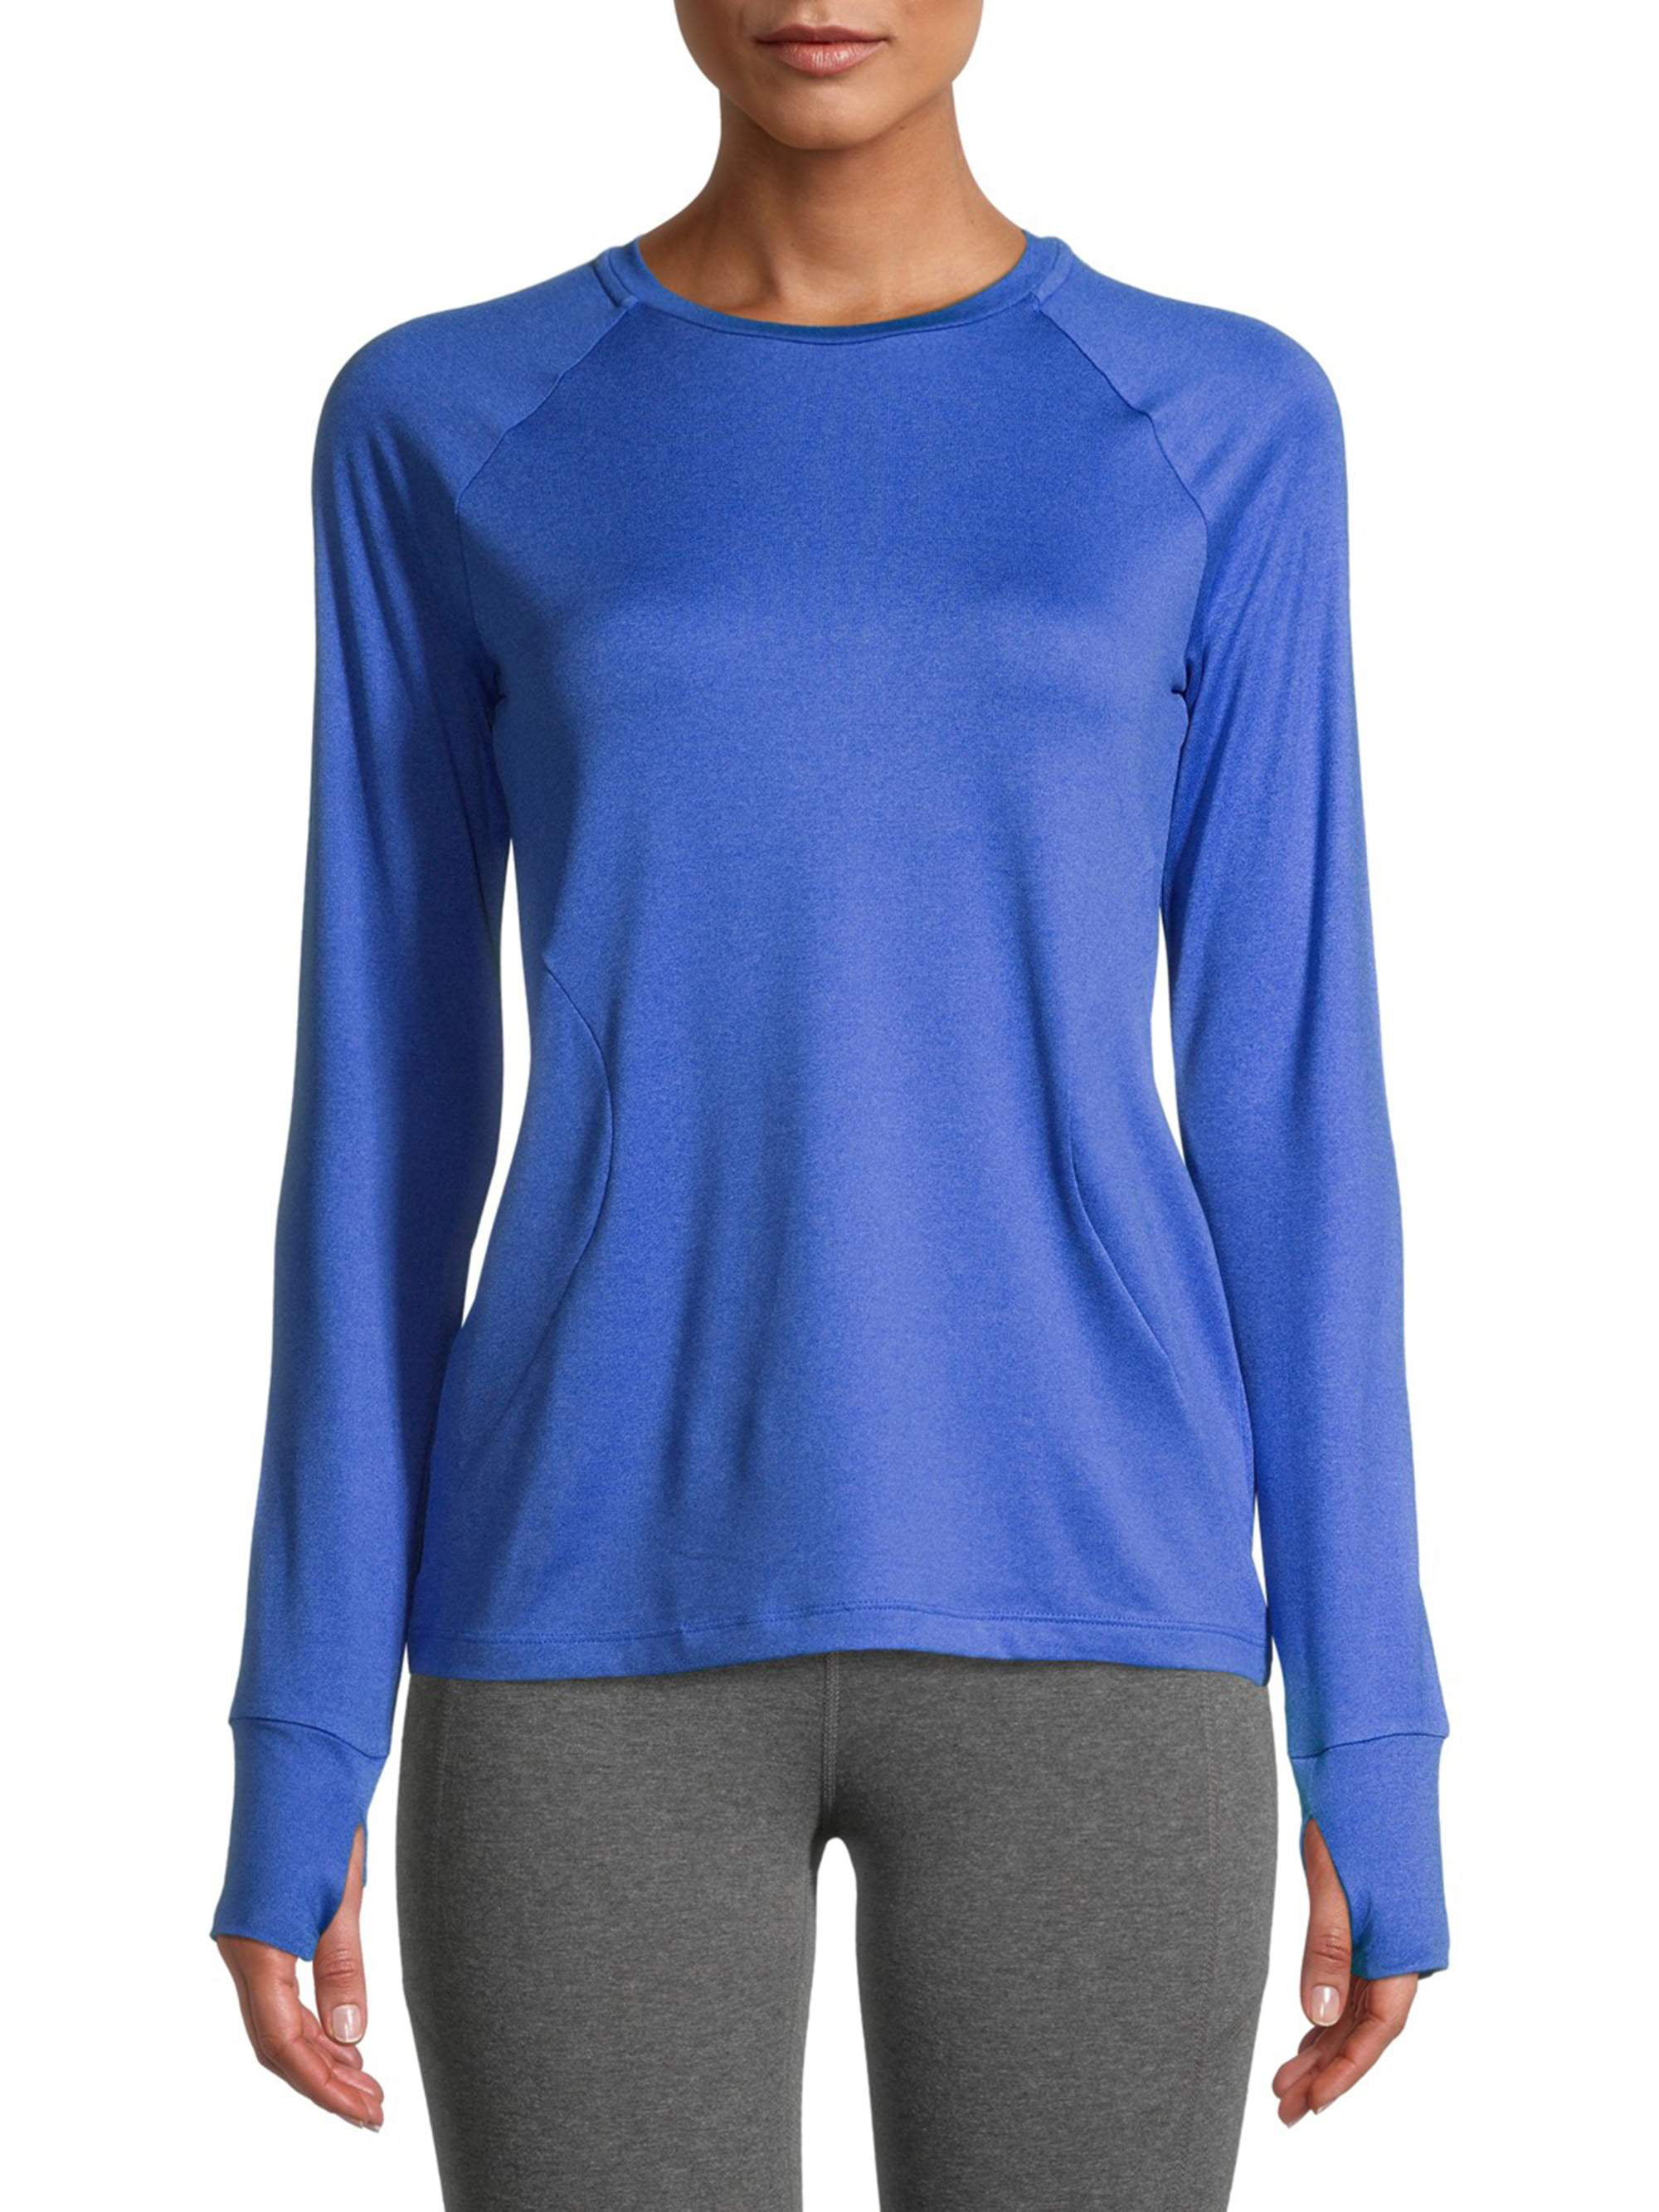 Athletic Works Women's Active Long Sleeve Performance T-Shirt - Walmart.com